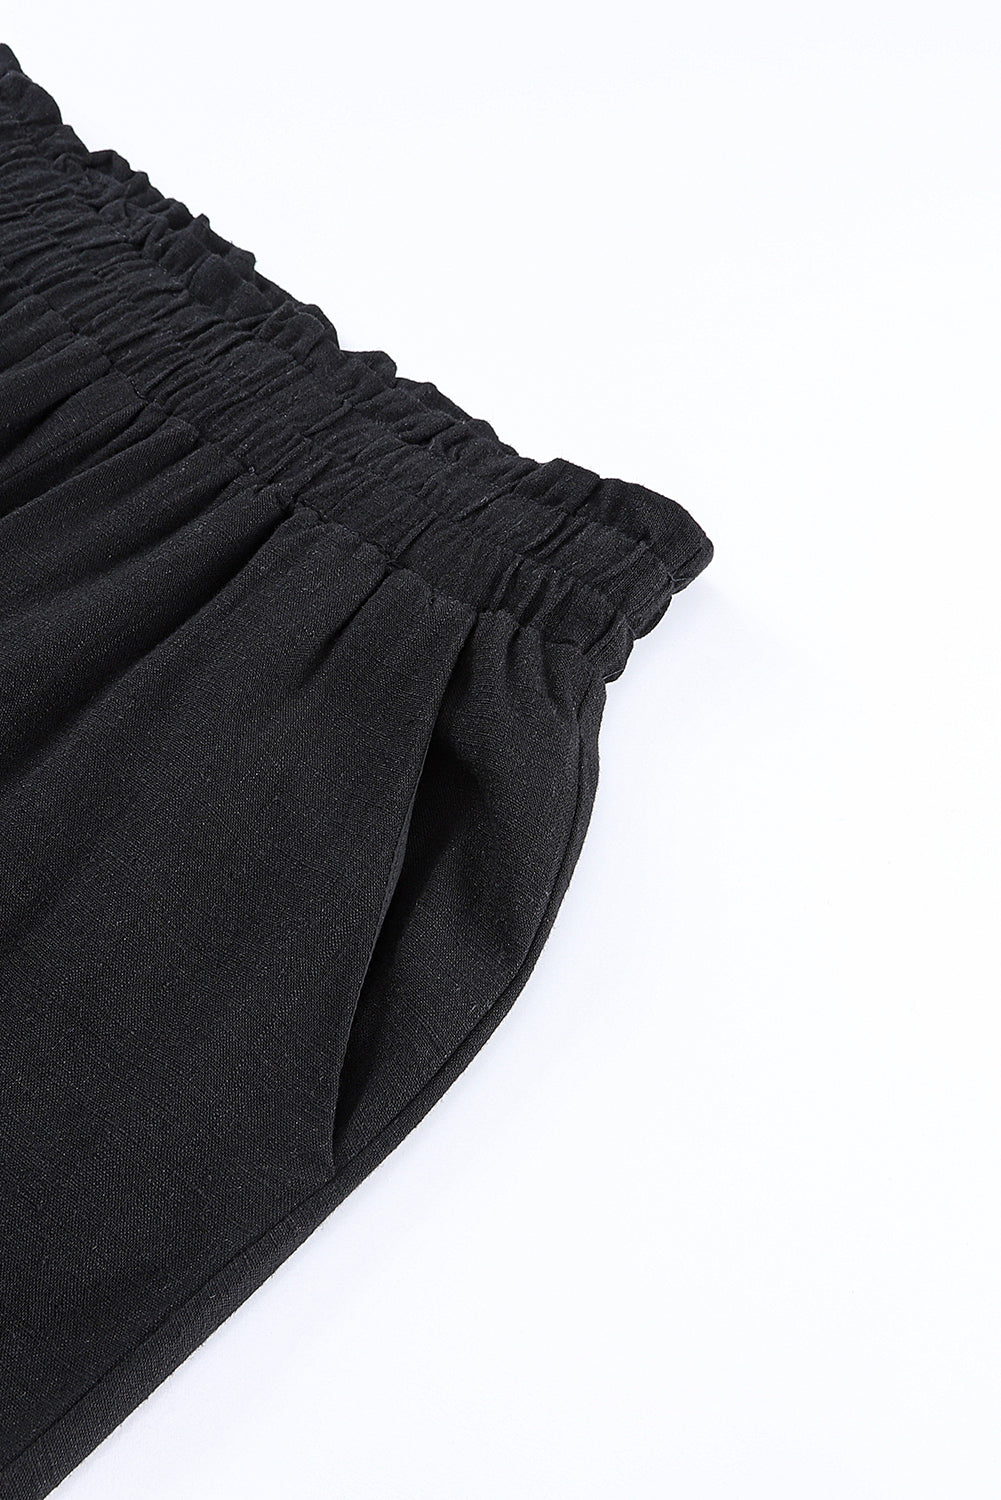 Black Wide Leg Elastic Waist Casual Pants with Pockets